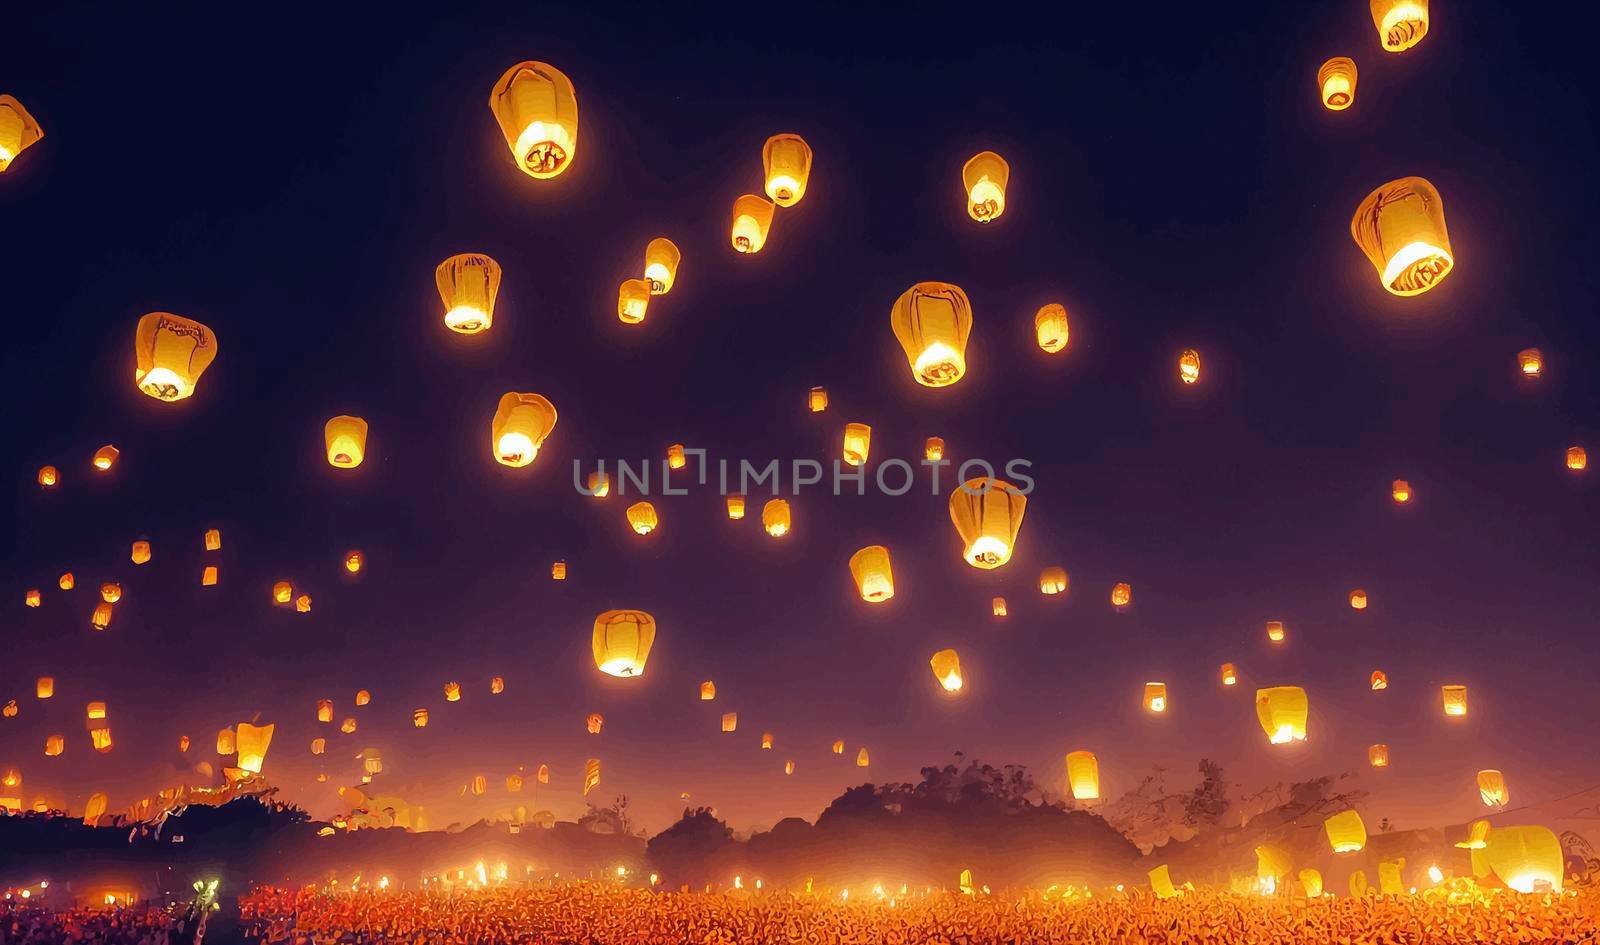 CHIANG MAI LANTERN FESTIVAL, flashlights in the air. cantoya balloons. by JpRamos